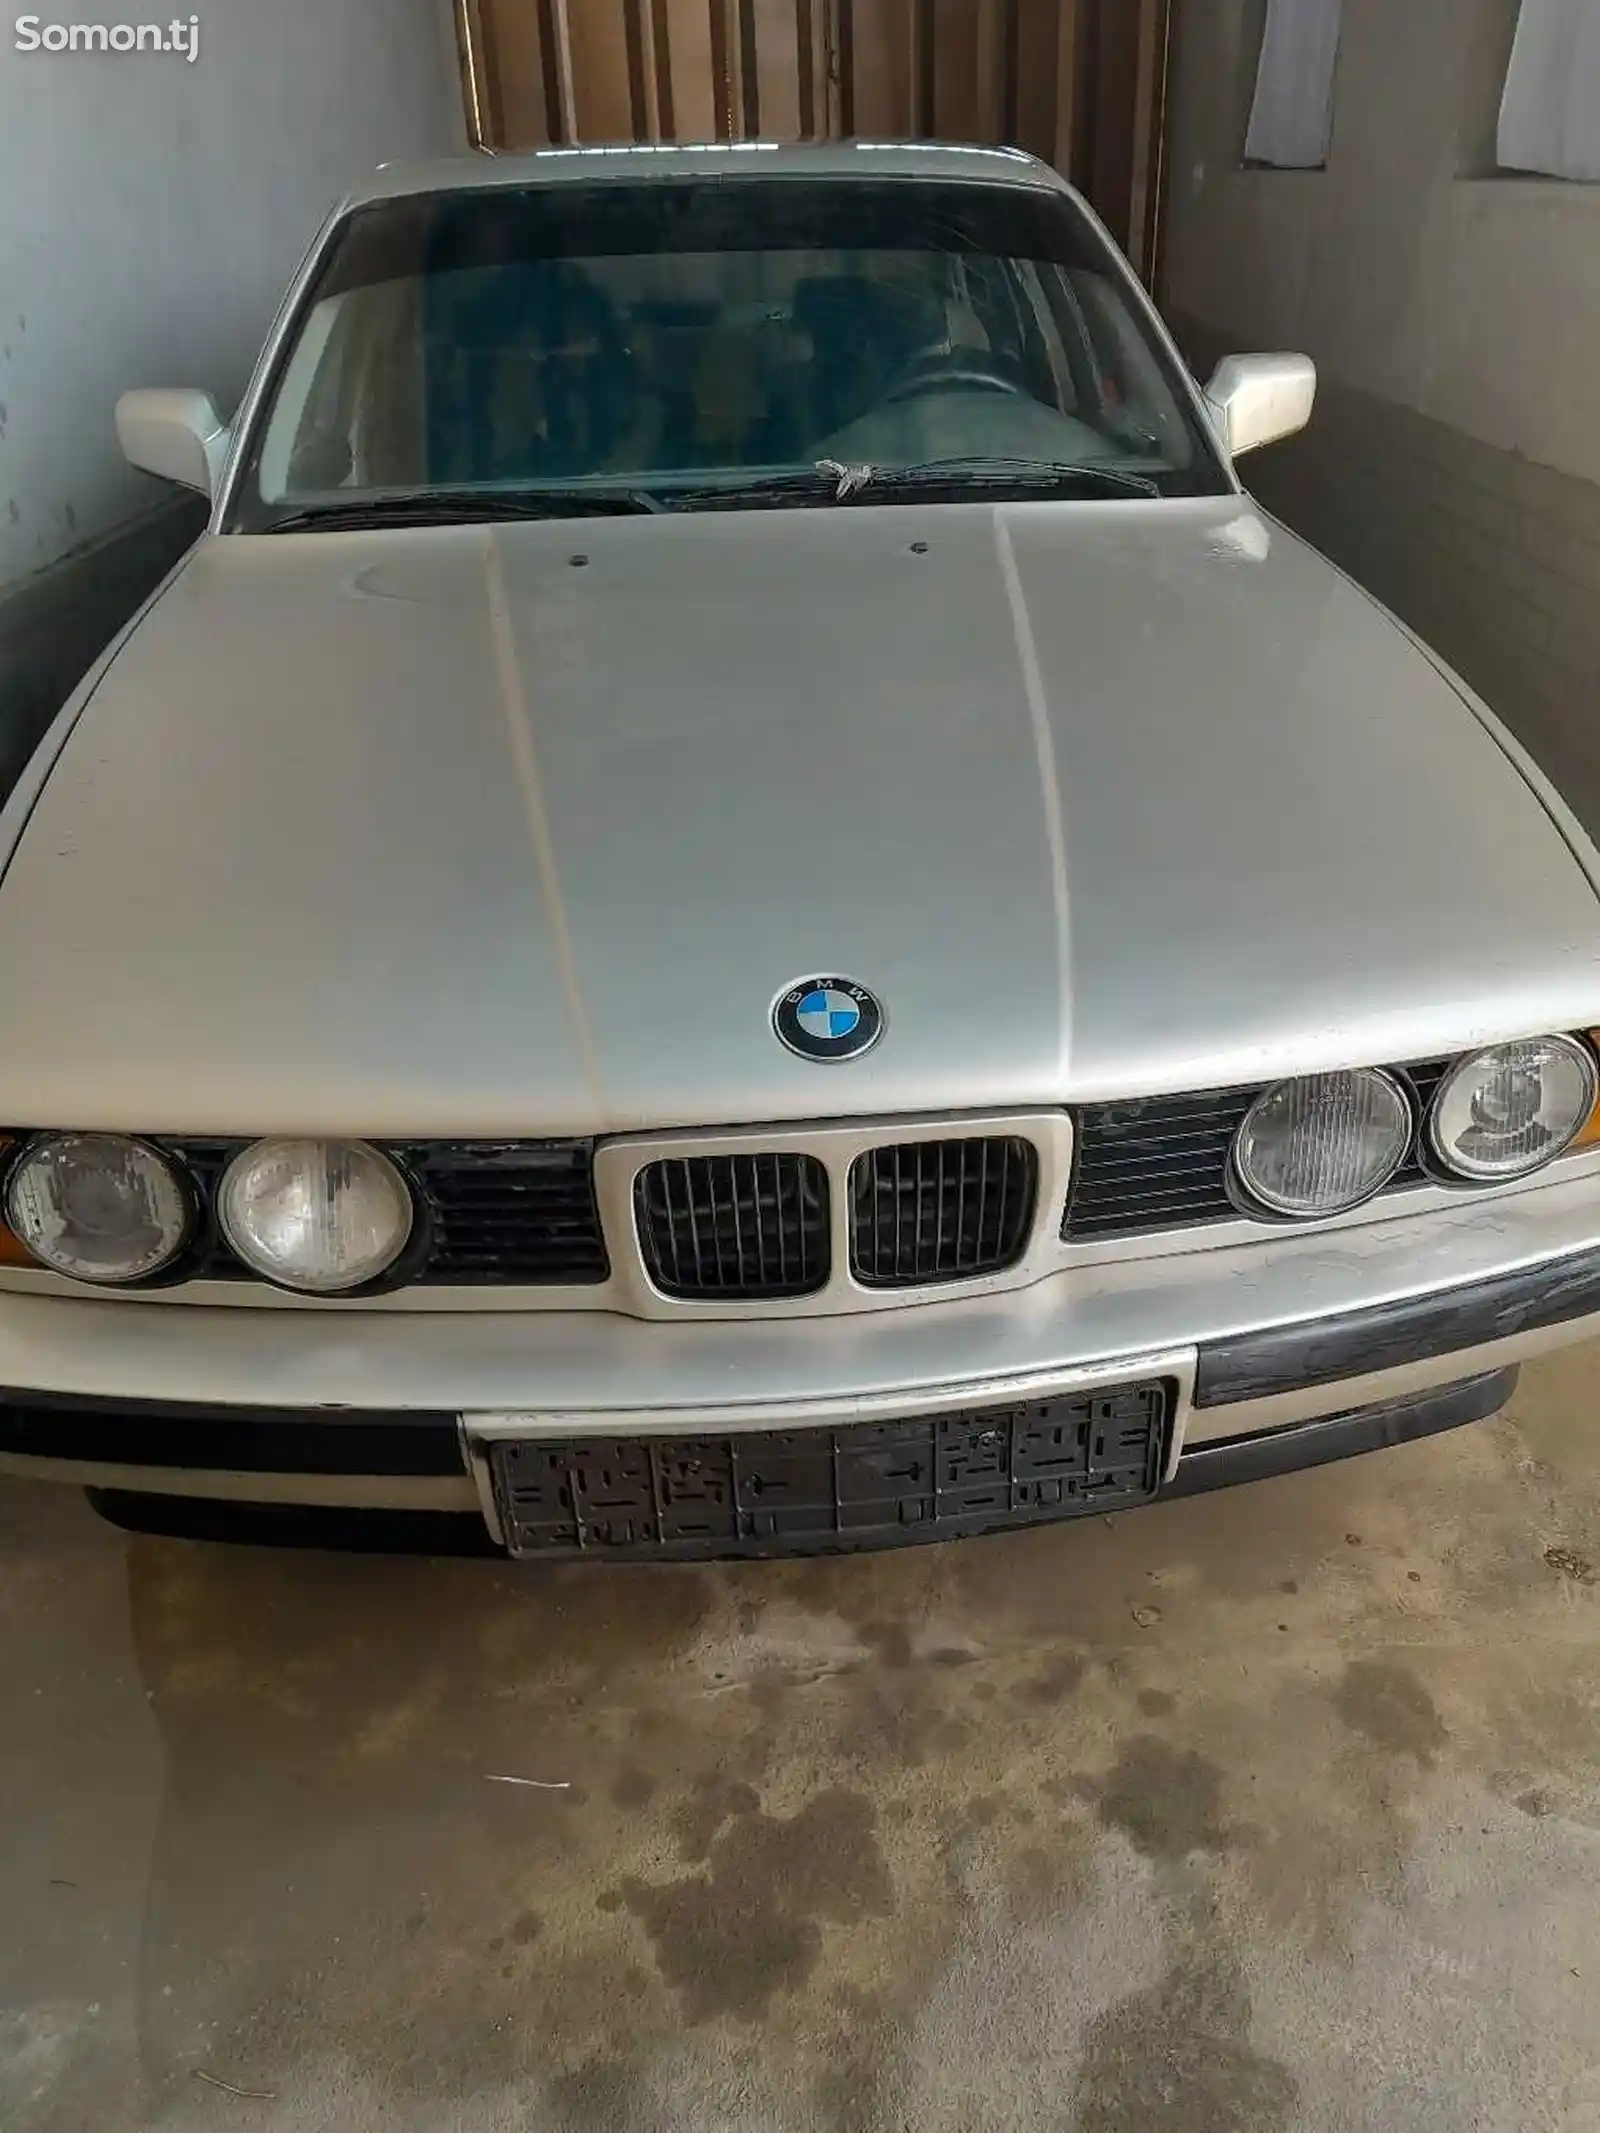 BMW 5 series, 1989-1